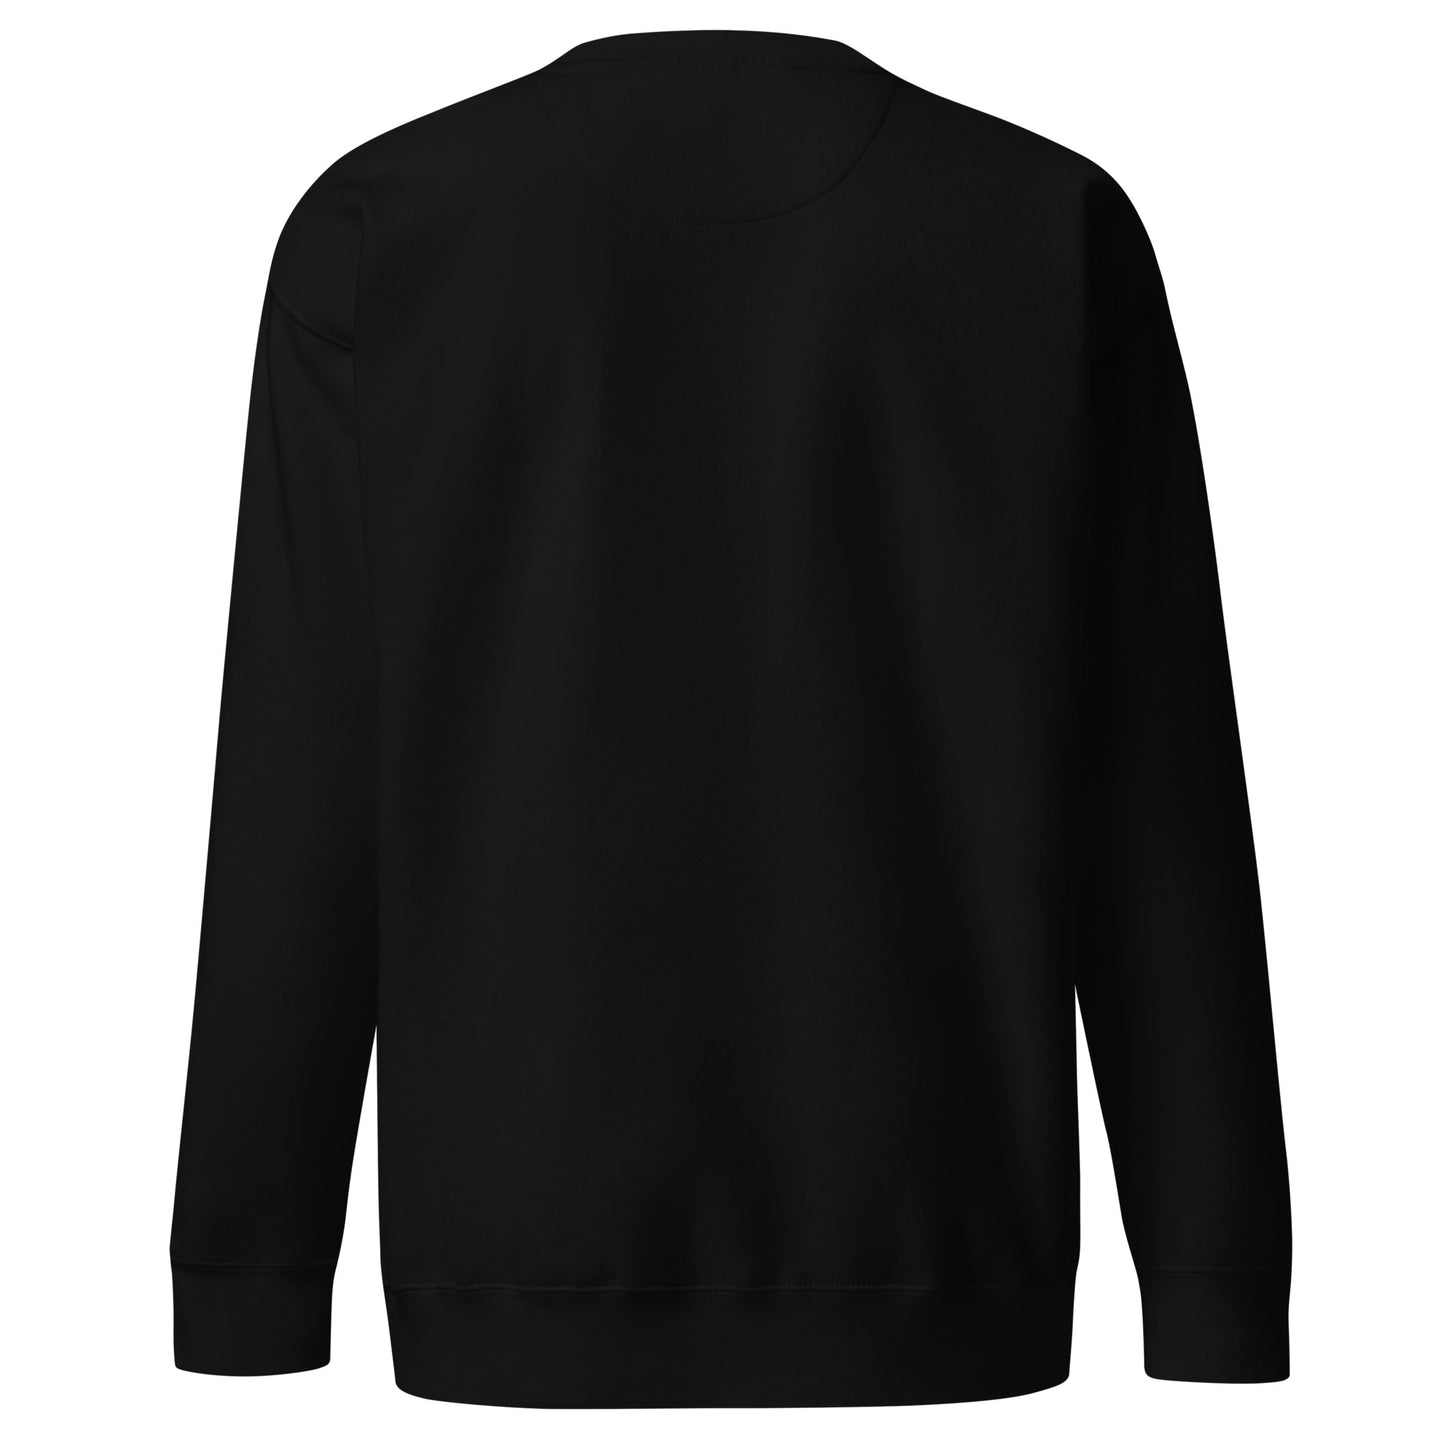 Mr. Darcy & Pizza Unisex Premium Sweatshirt